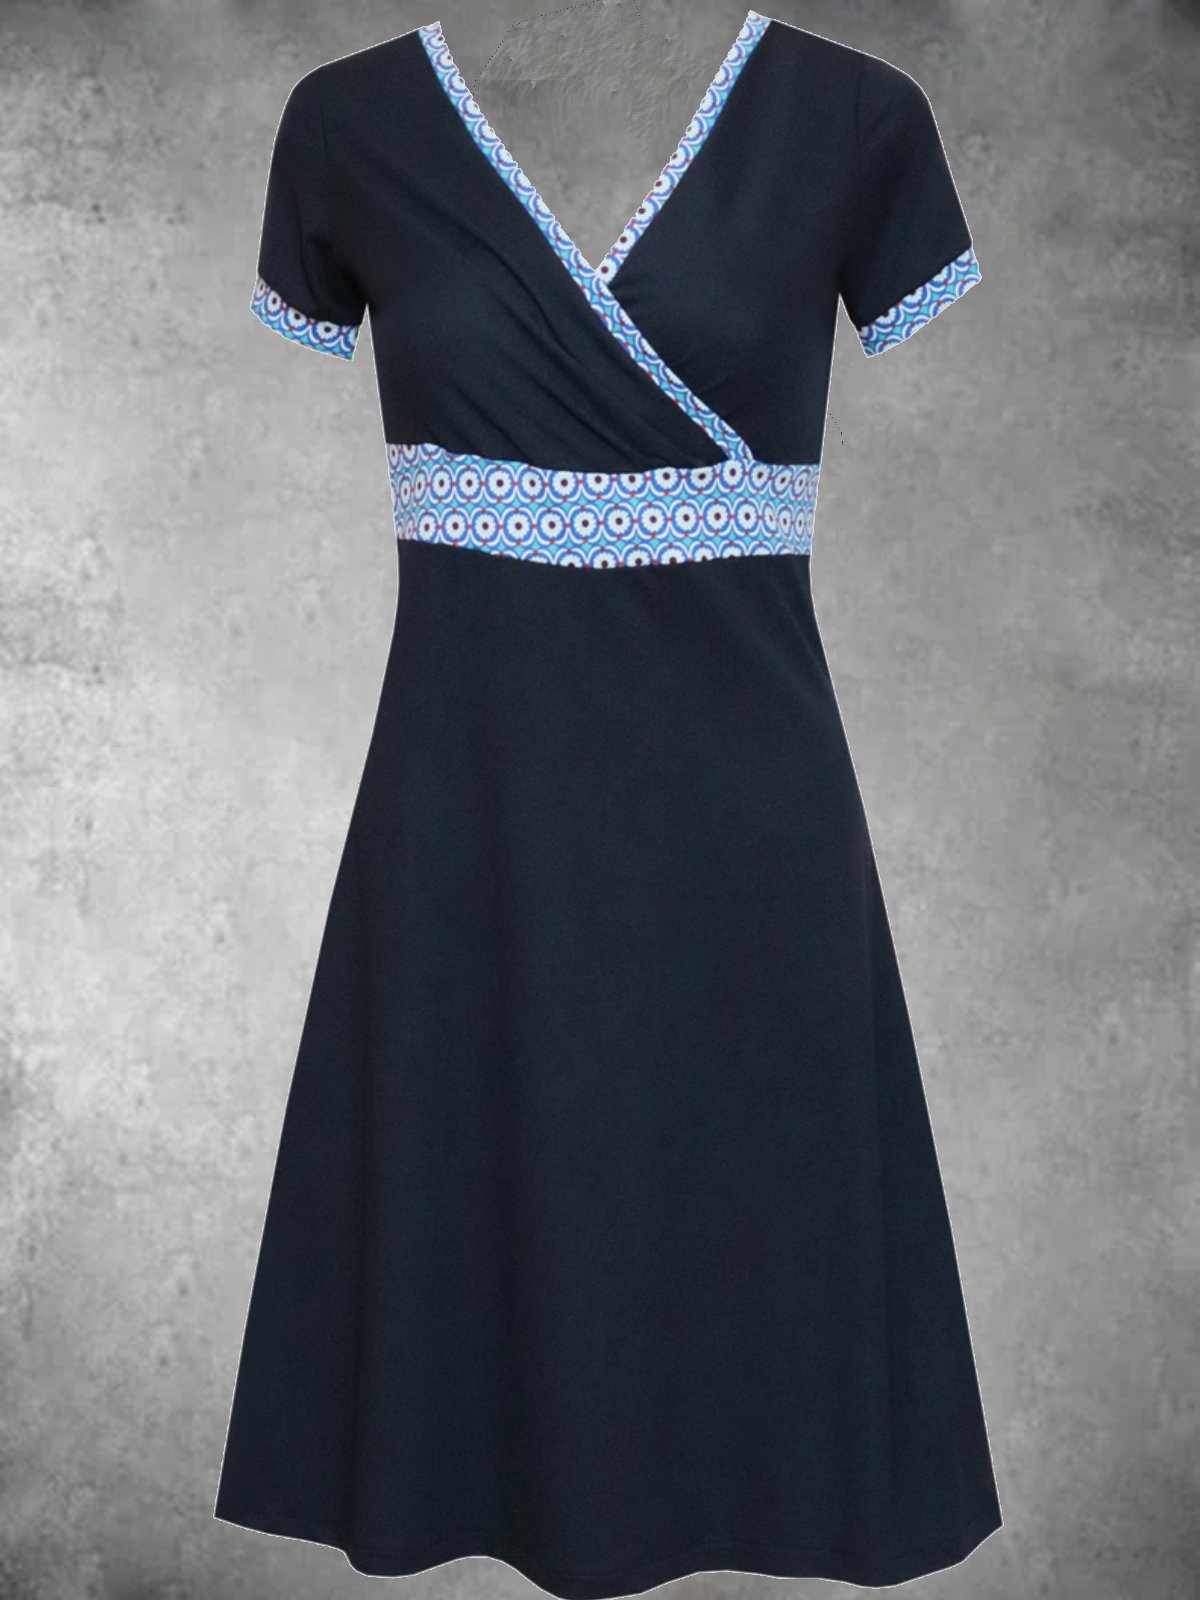 Casual Short Sleeve Printed Dress